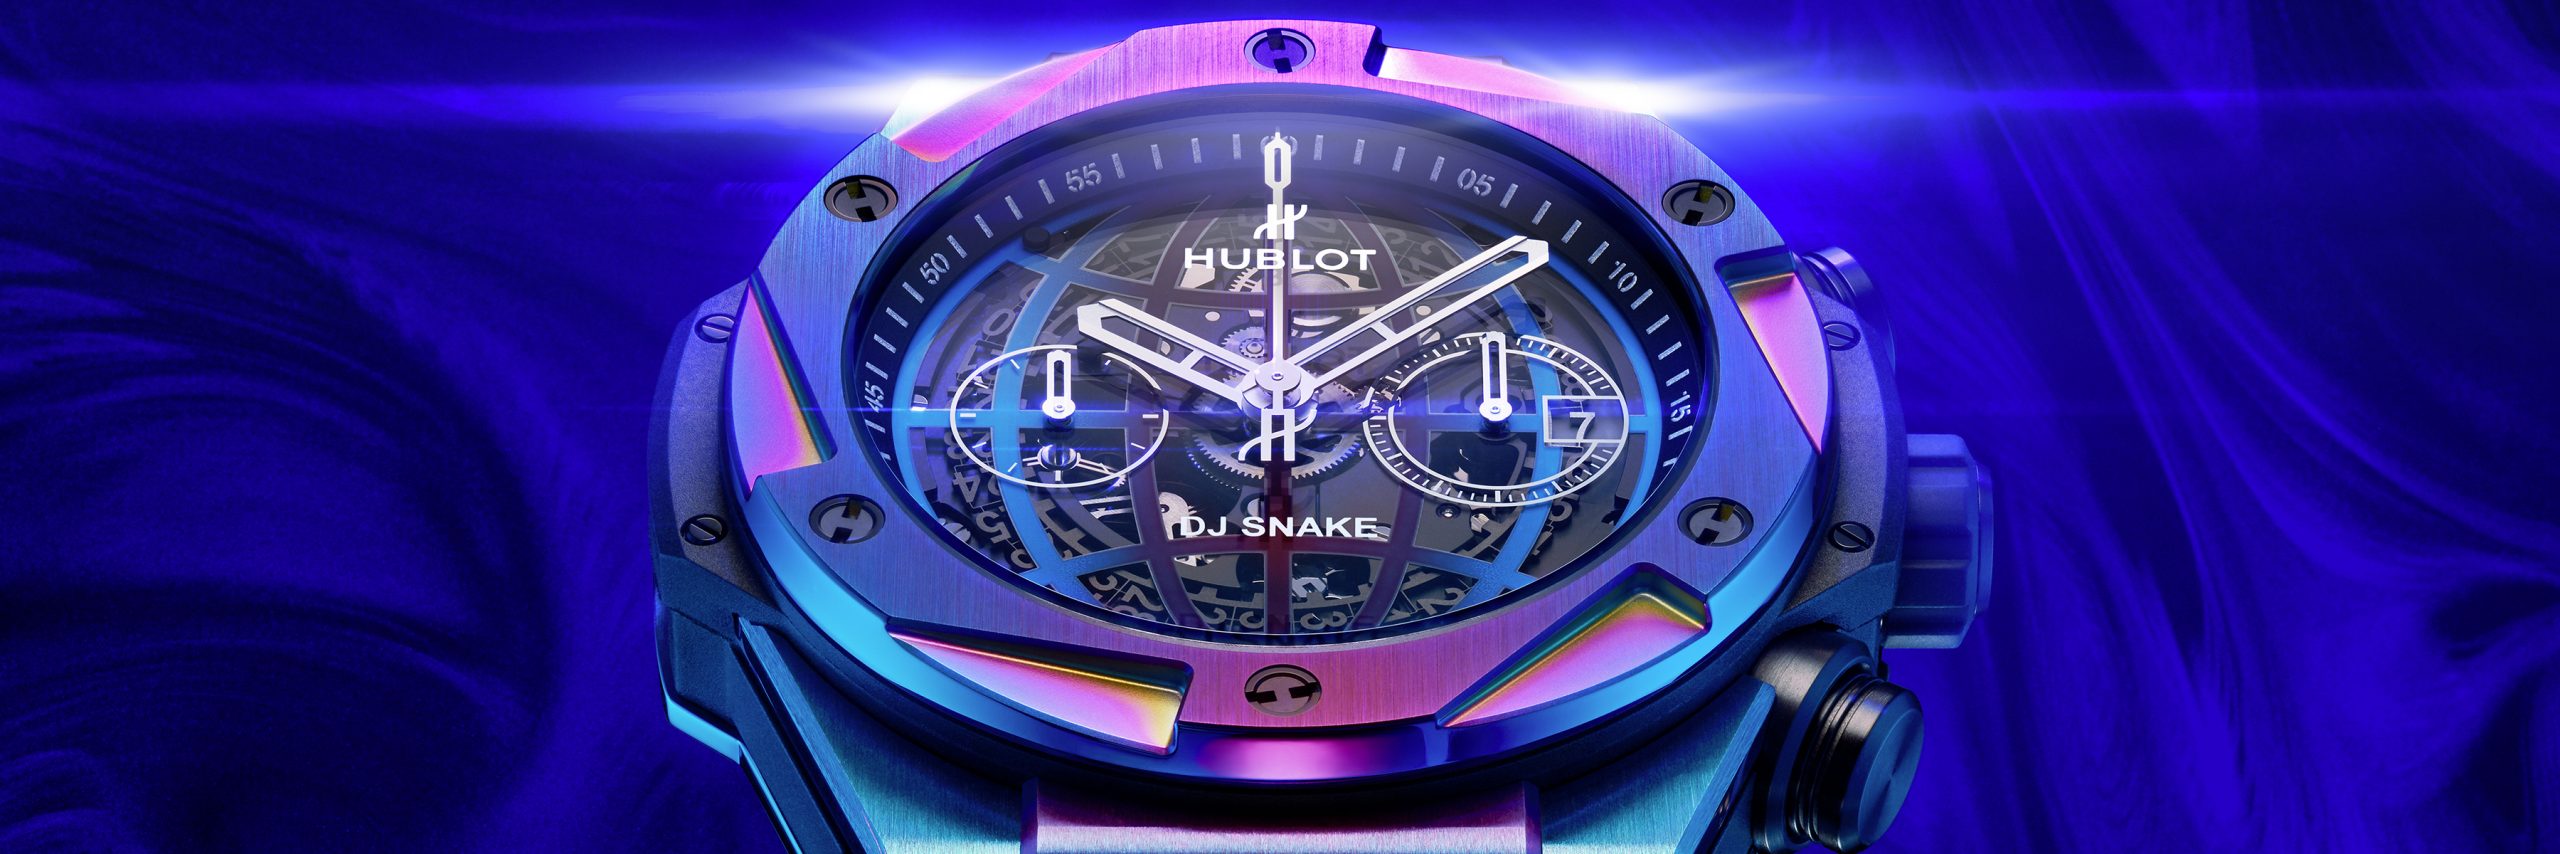 Hublot Unveils Big Bang DJ Snake – The First Collaboration with the Worldwide Music Sensation, DJ Snake